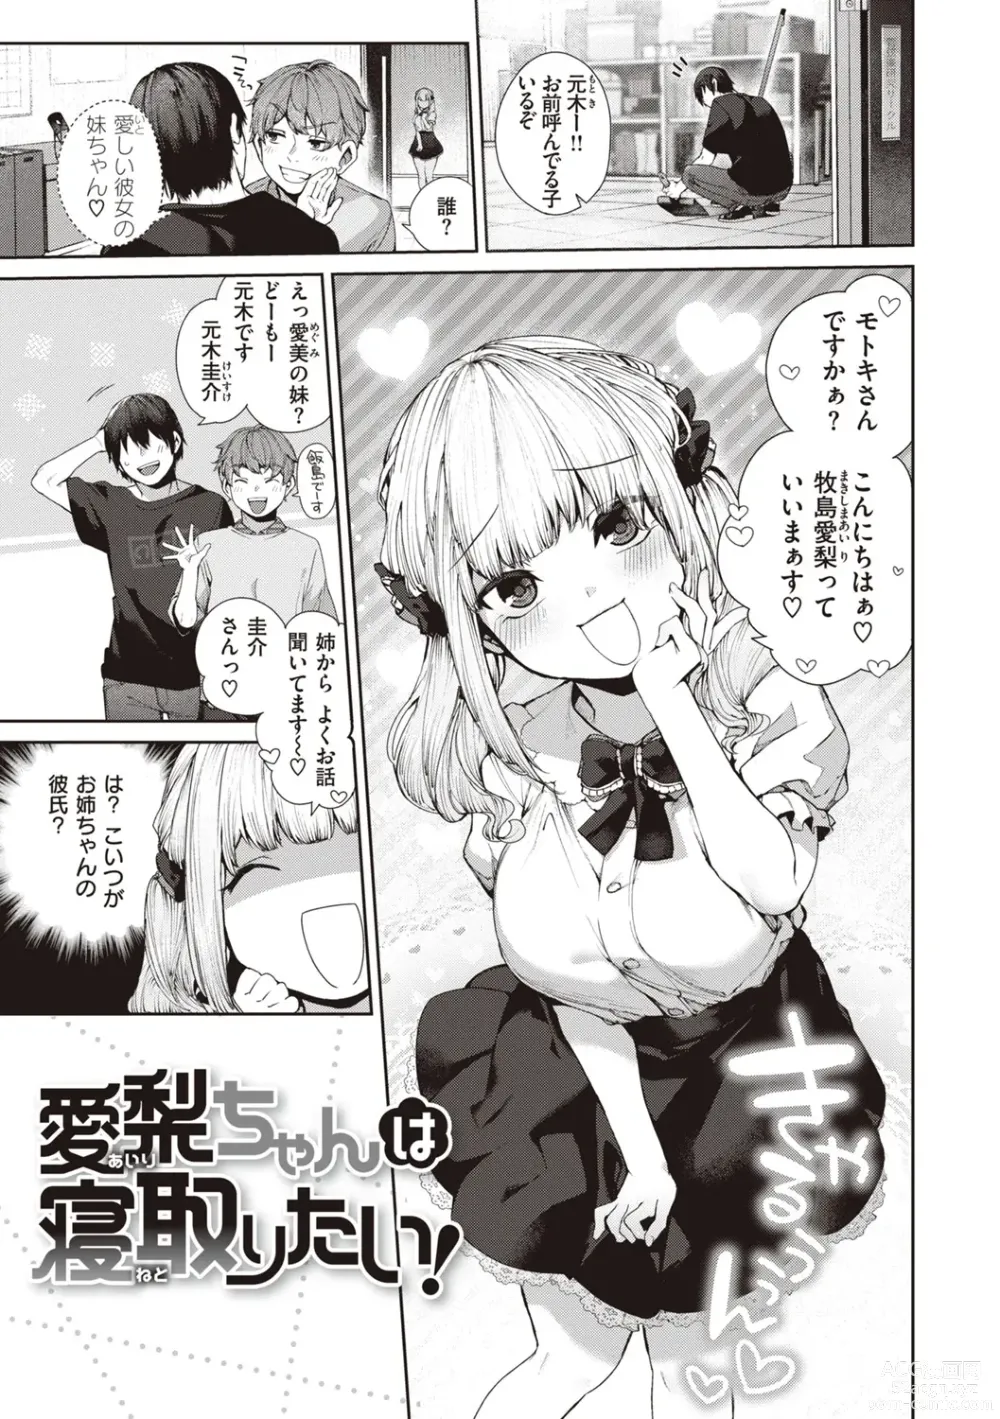 Page 29 of manga DA-DA-MO-RE